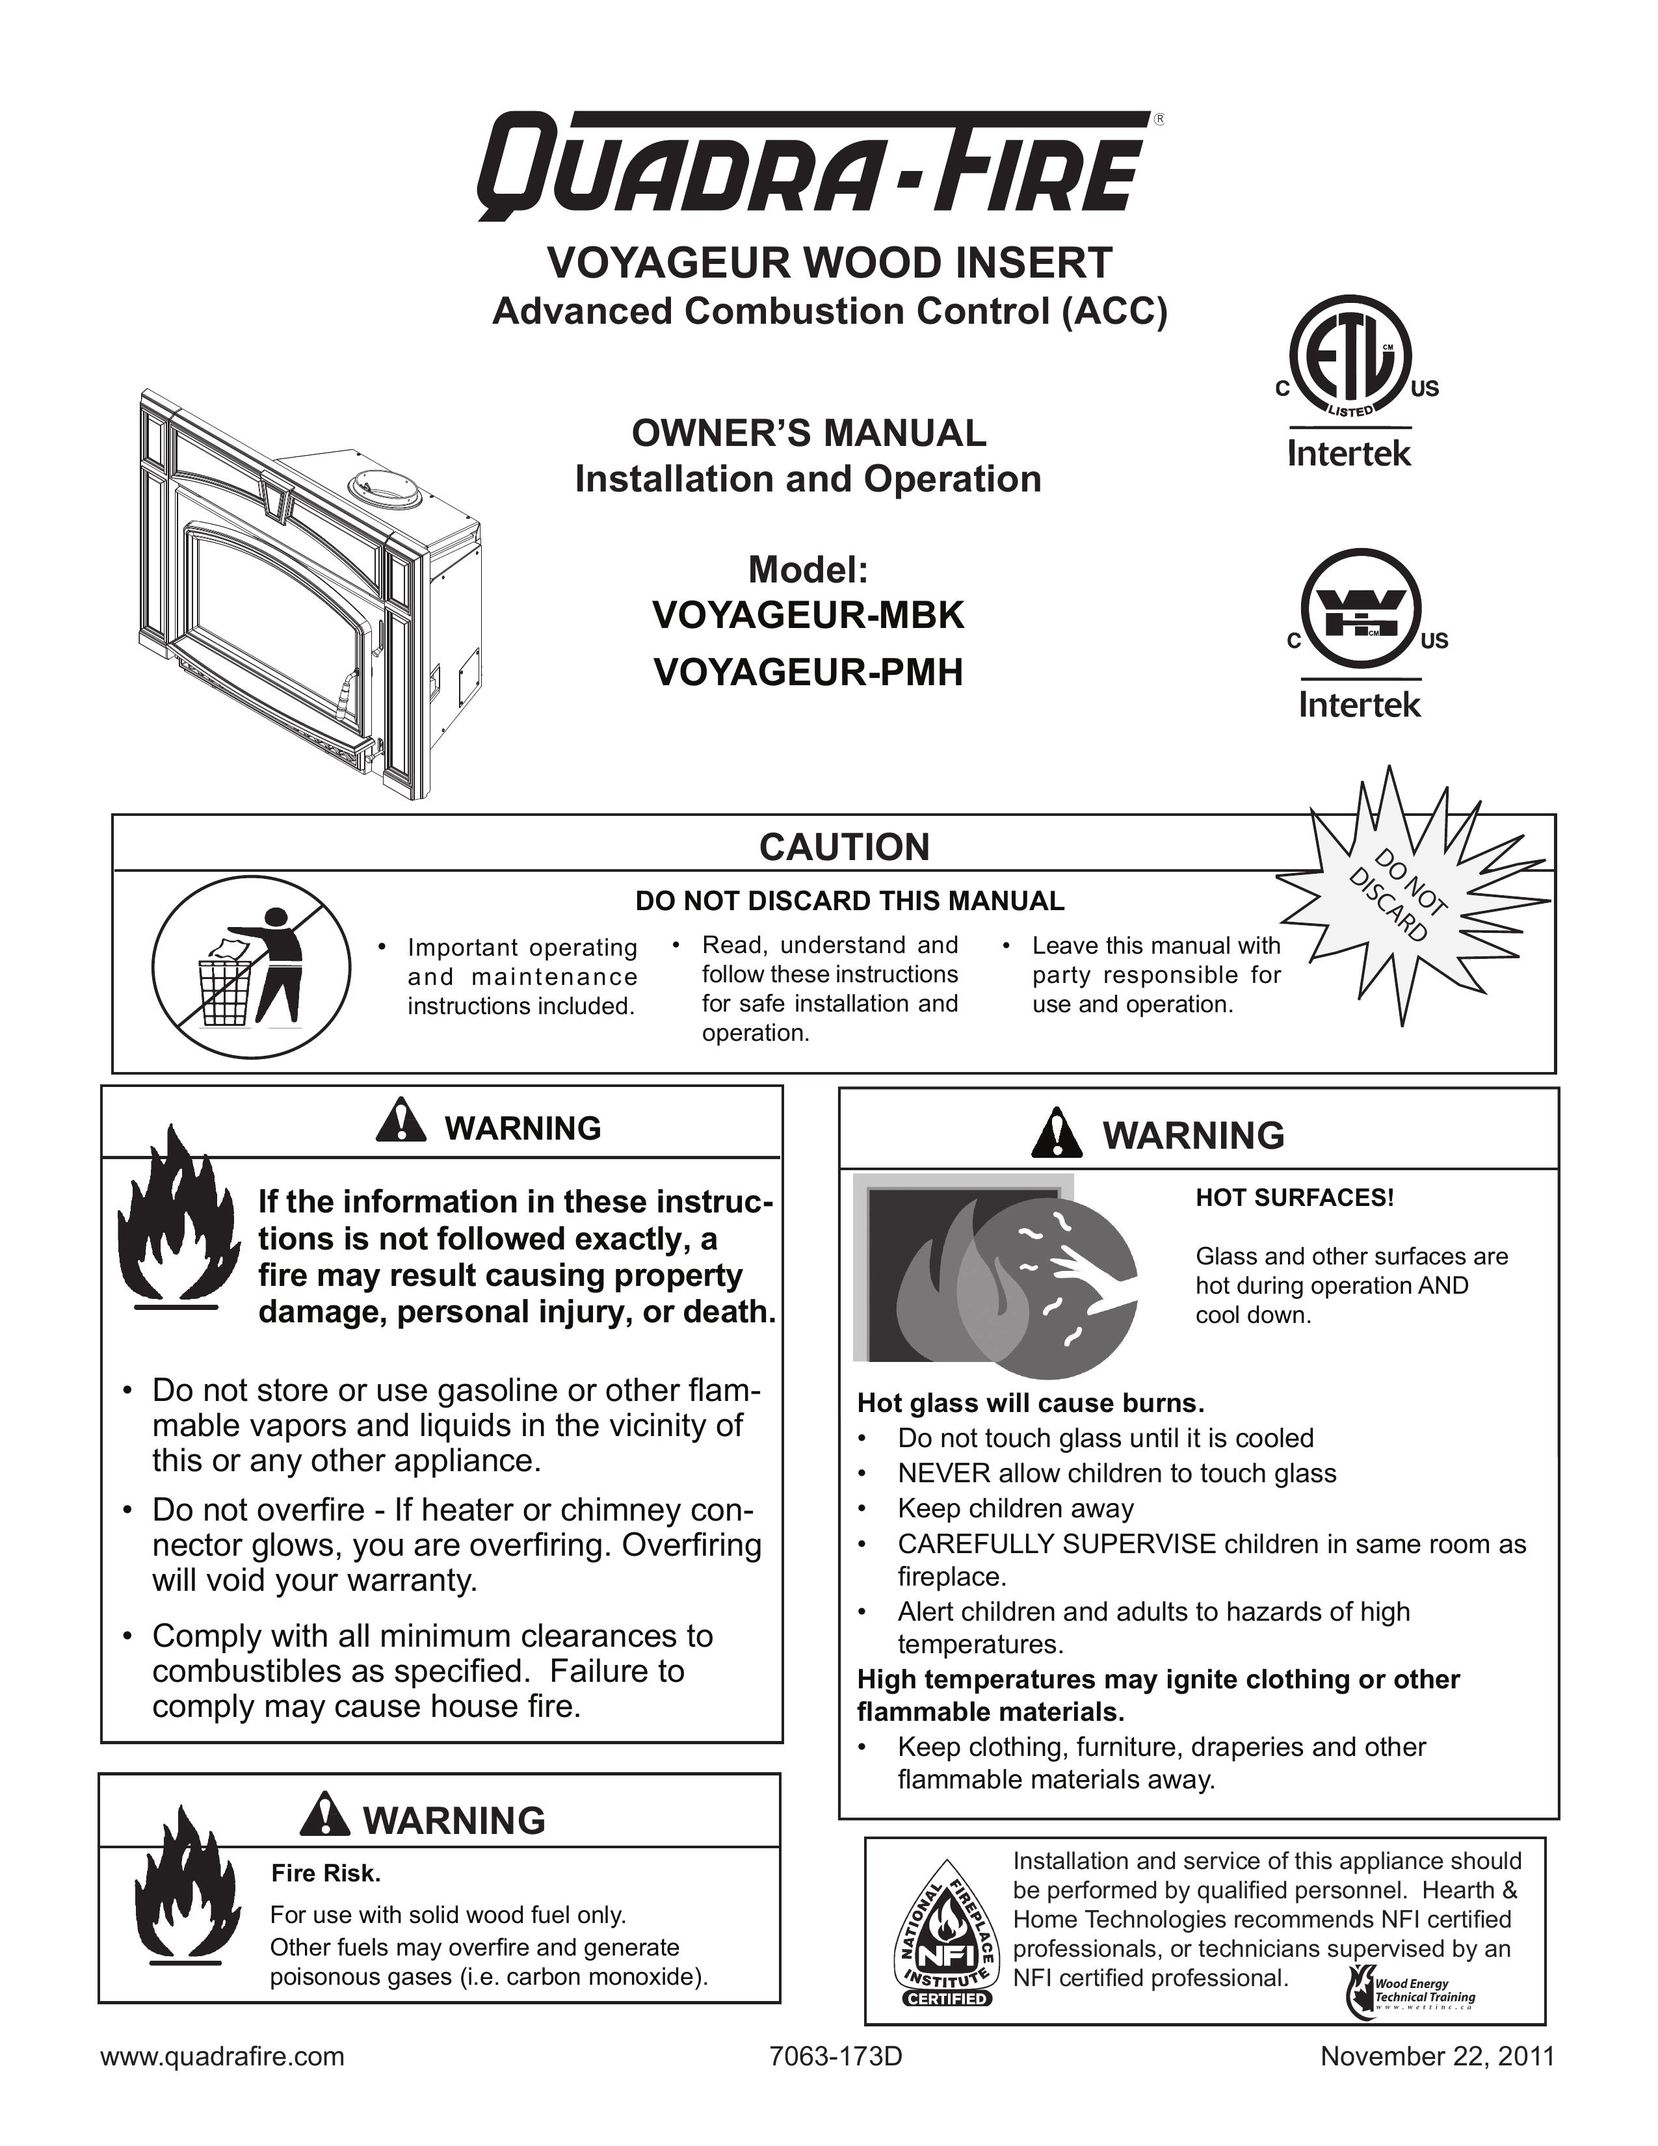 Quadra-Fire VOYAGEUR-PMH Indoor Fireplace User Manual